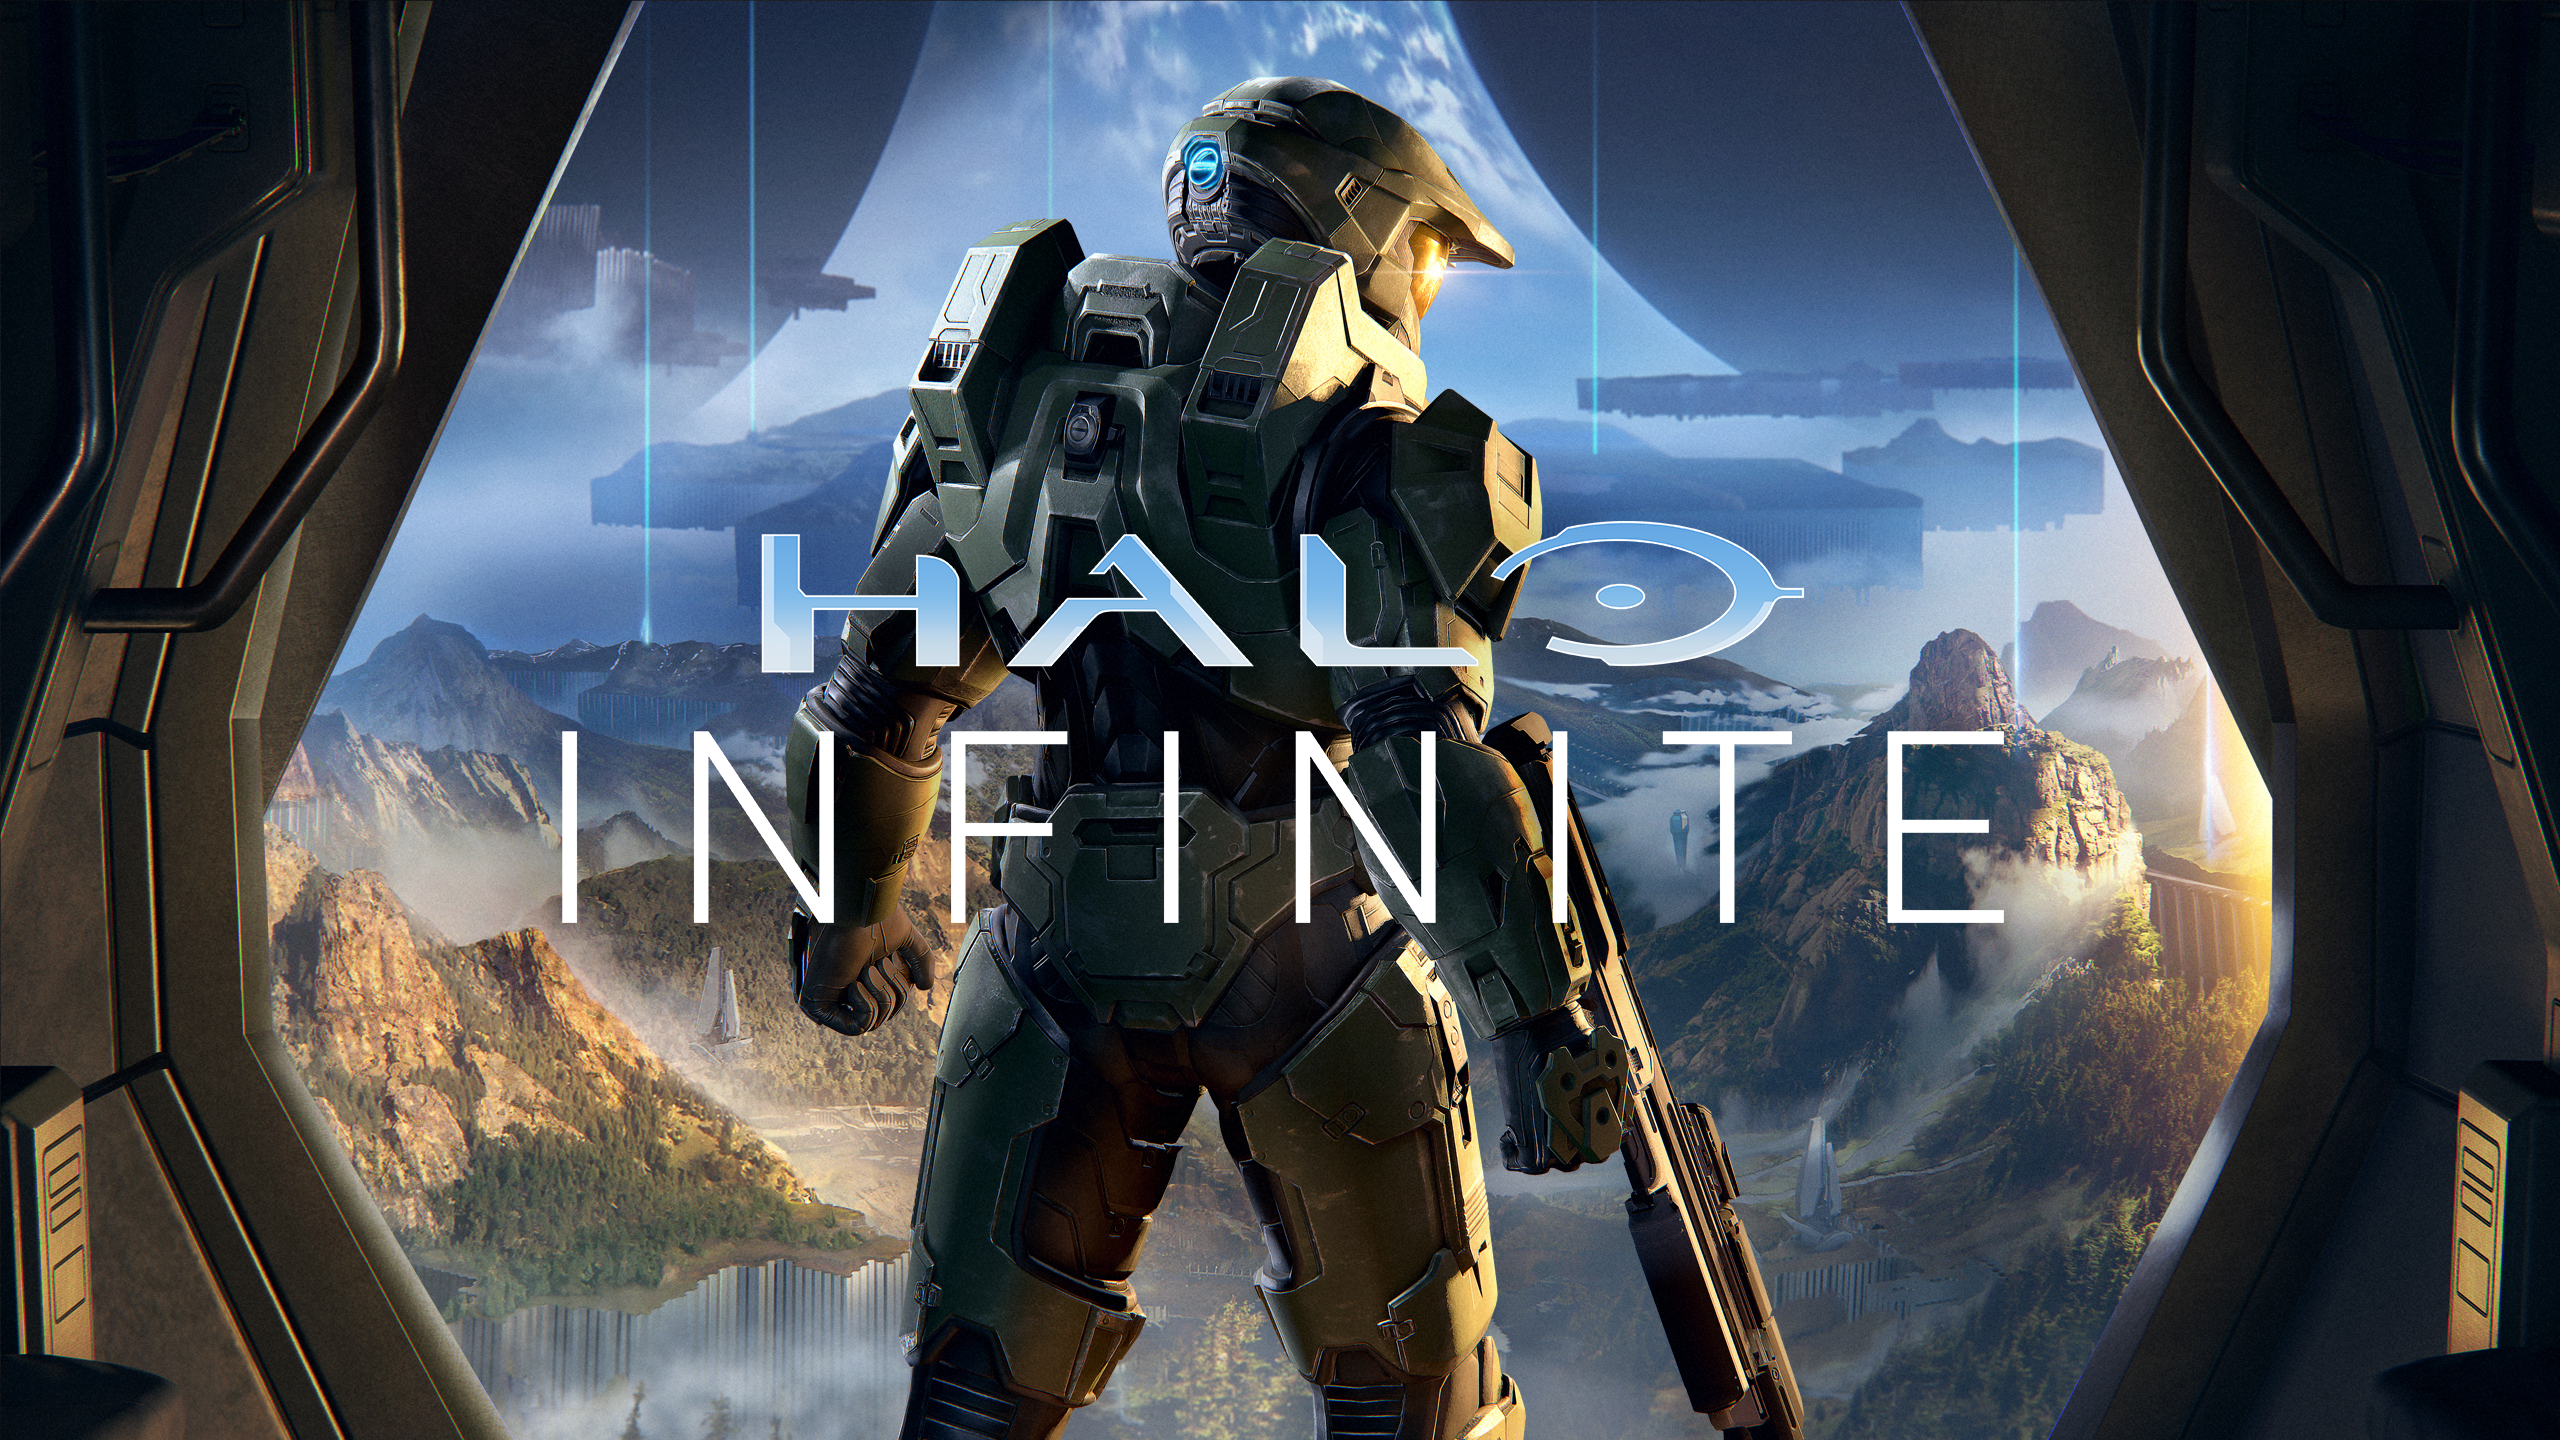 General 2560x1440 Halo Infinite video games Master Chief (Halo) video game art video game characters science fiction futuristic armor